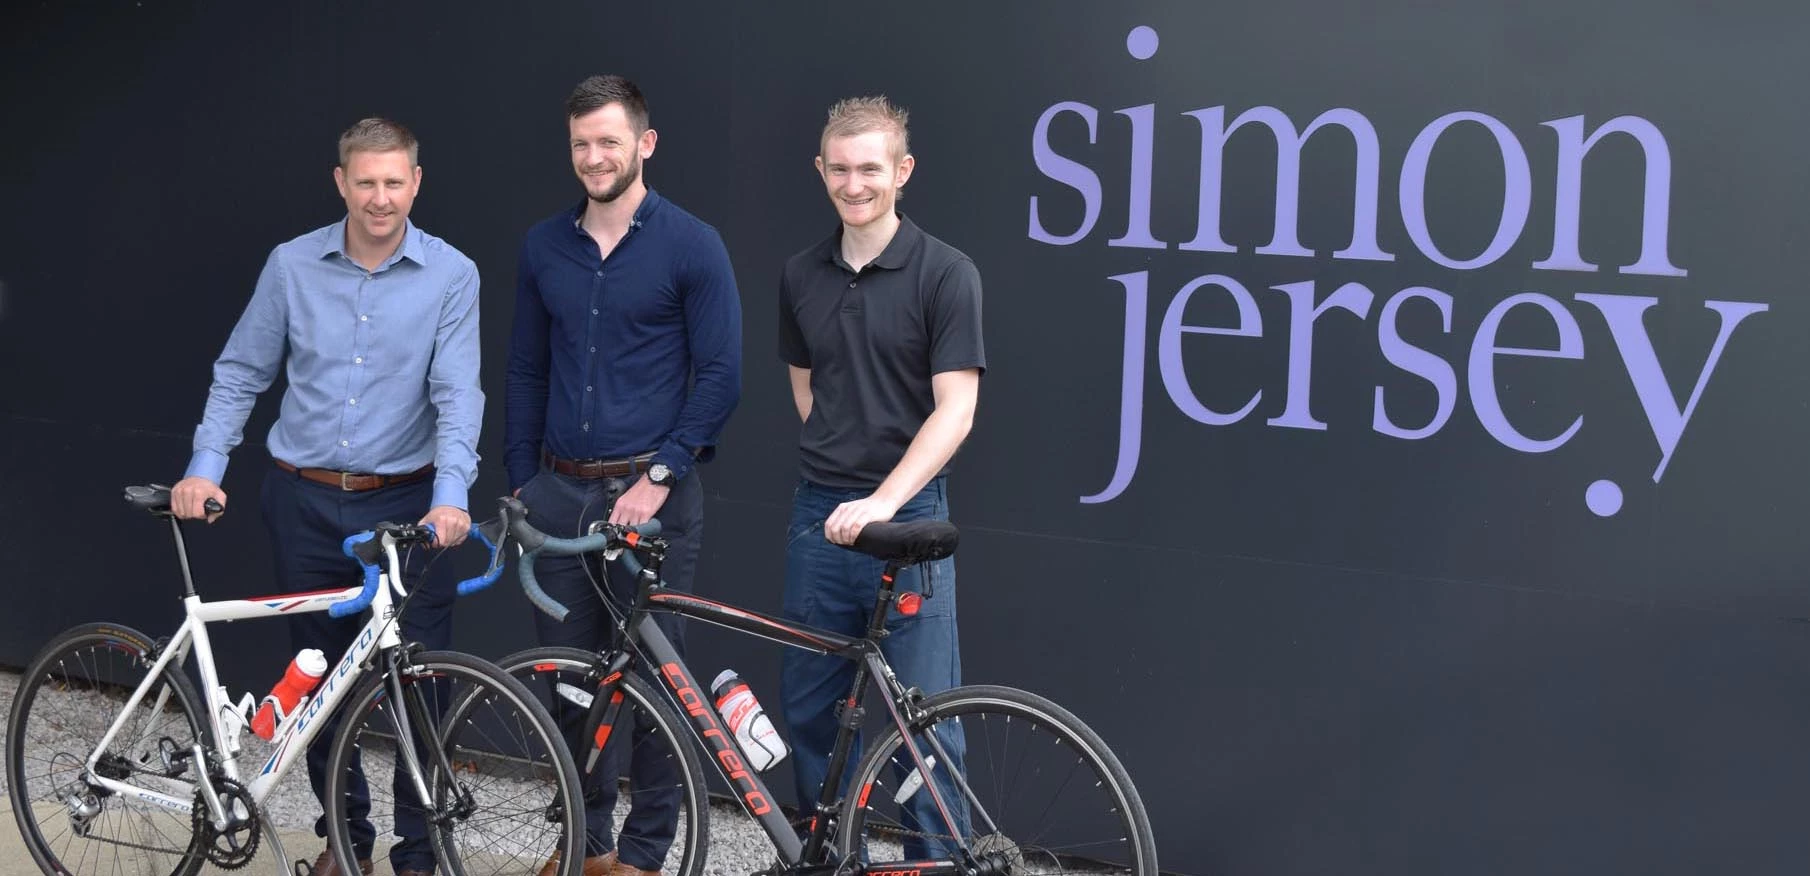 Simon Jersey cyclists